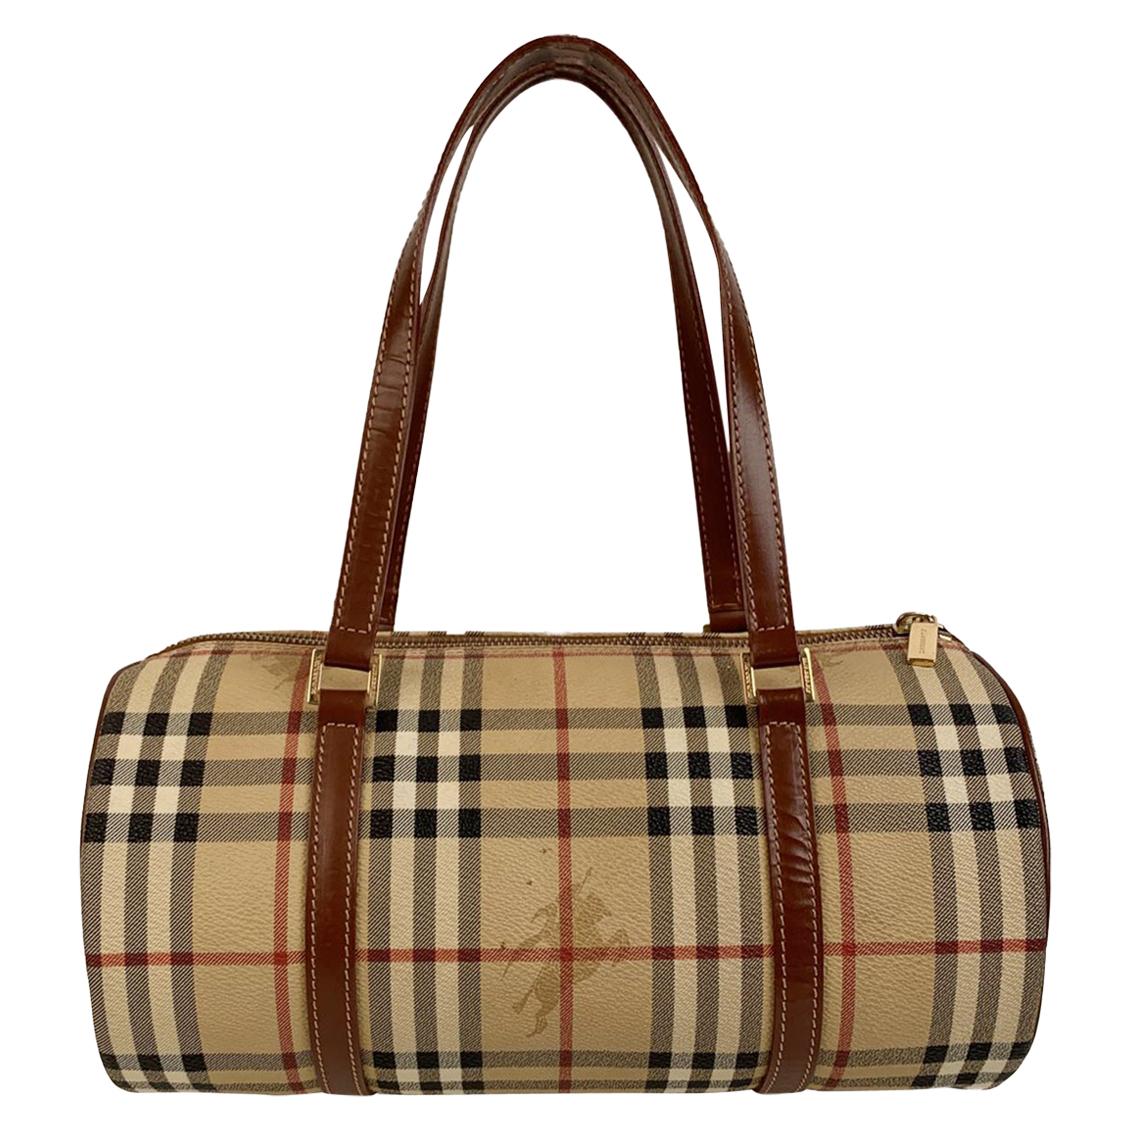 Burberry Beige Nova Check Canvas Handbag Satchel